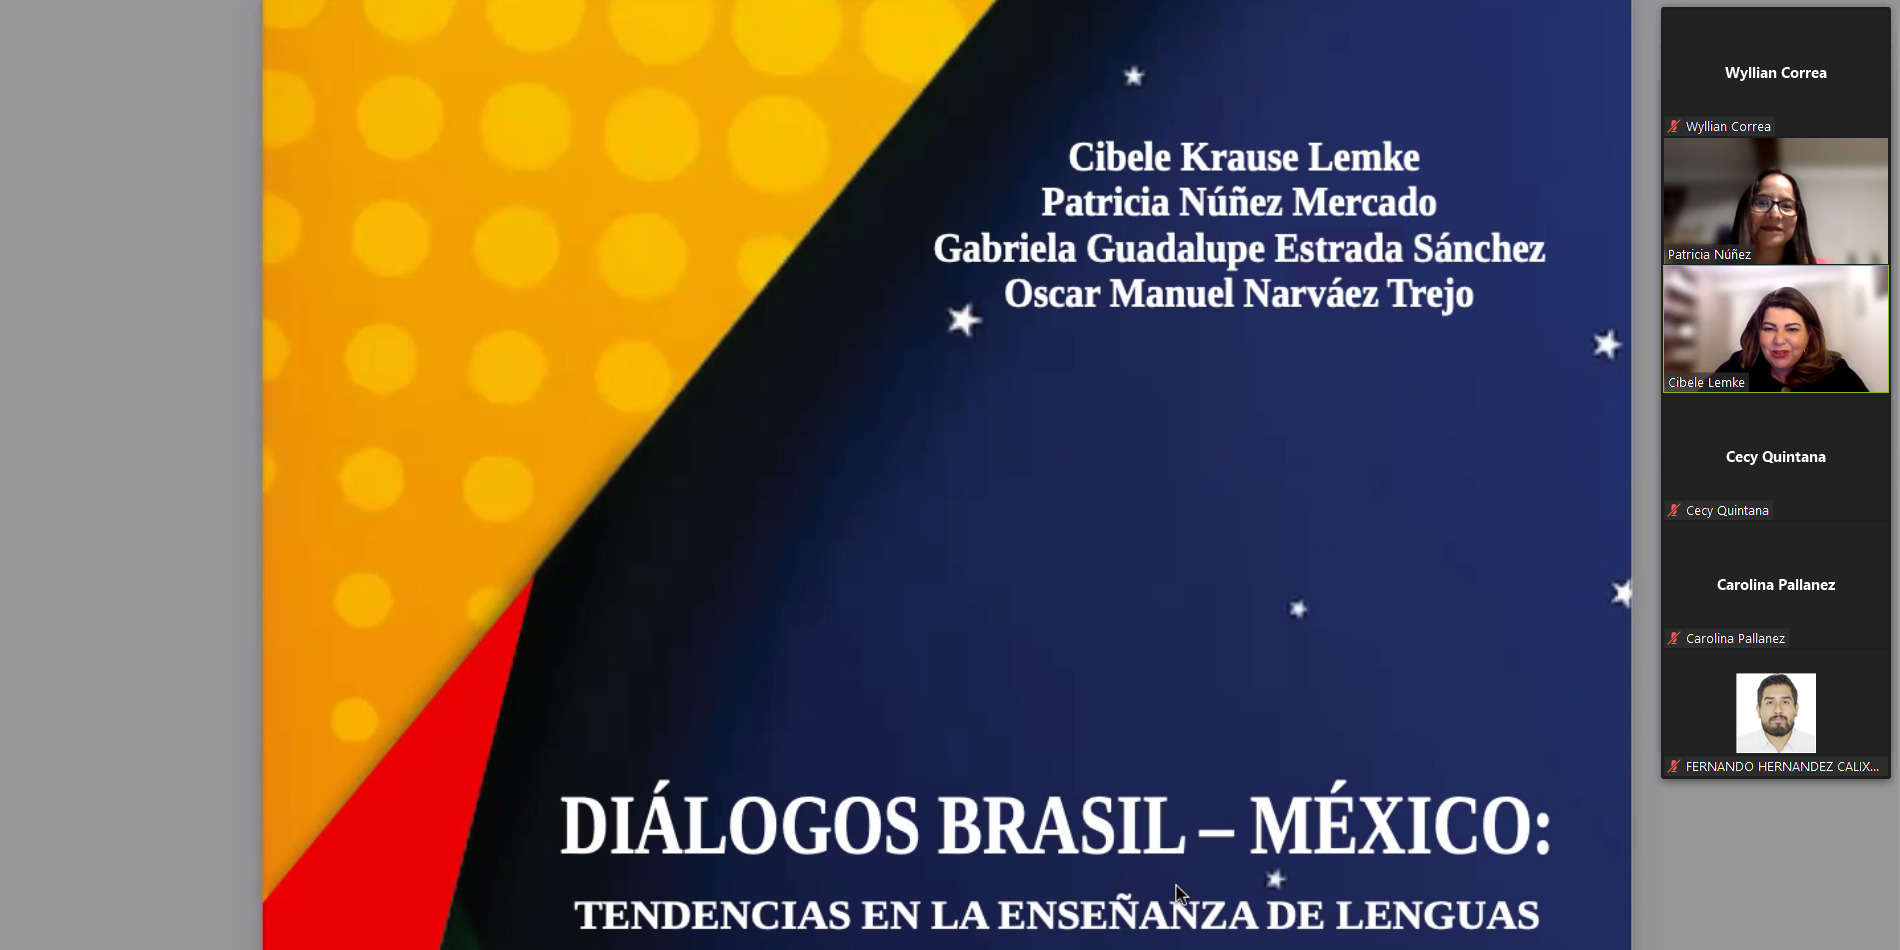 Unicentro e Universidade Veracruzana promovem simpósio sobre ensino de línguas estrangeiras 